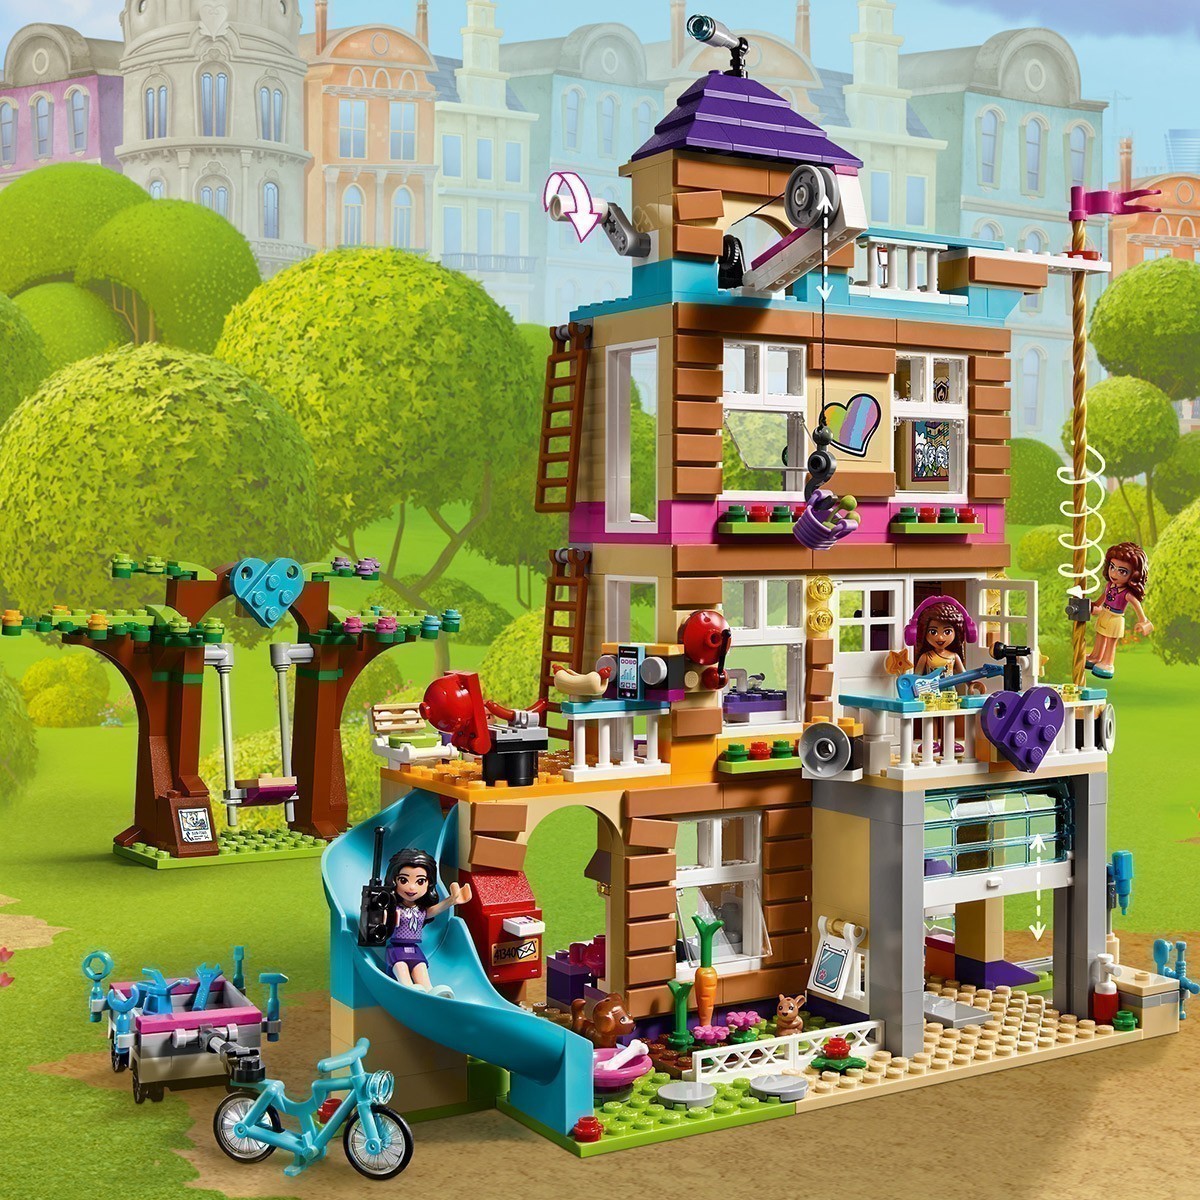 LEGO Friends 41340 - Friendship House